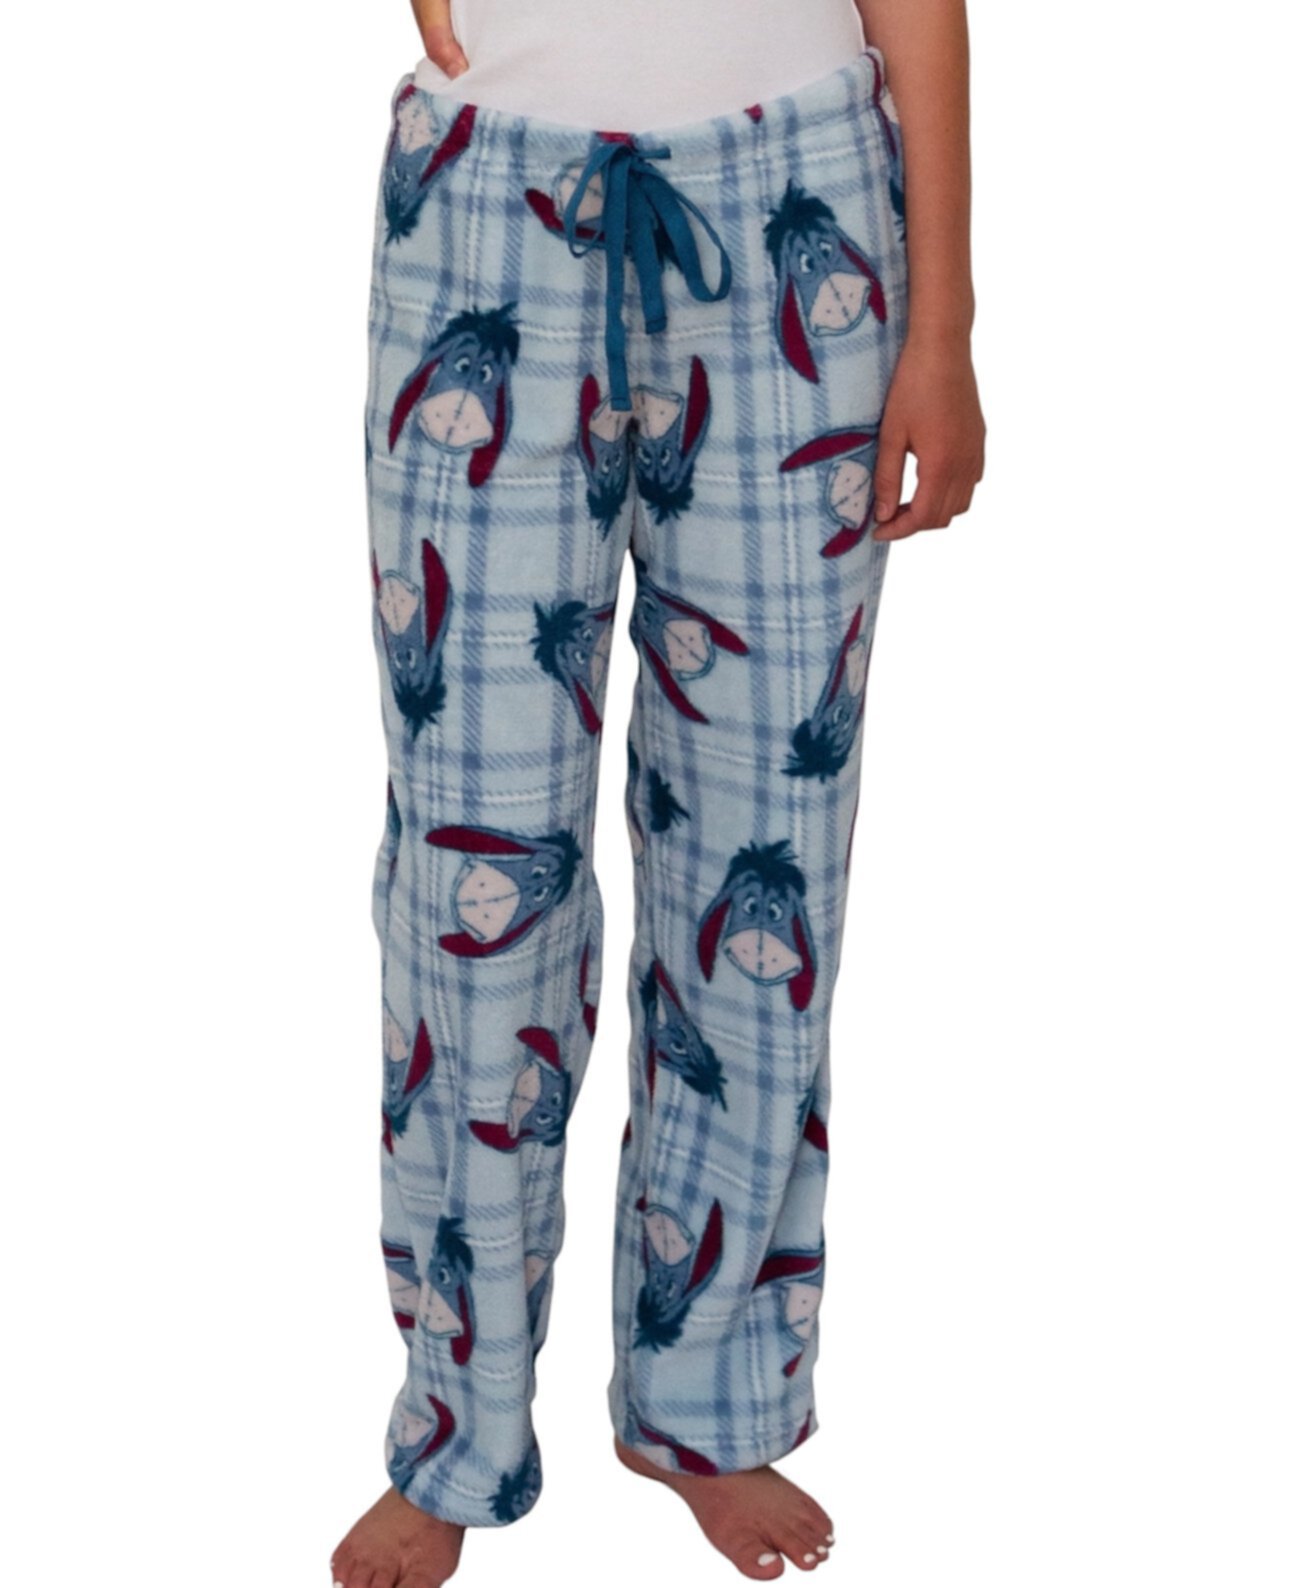 Eeyore Soft Plush Пижамные штаны, только онлайн Disney